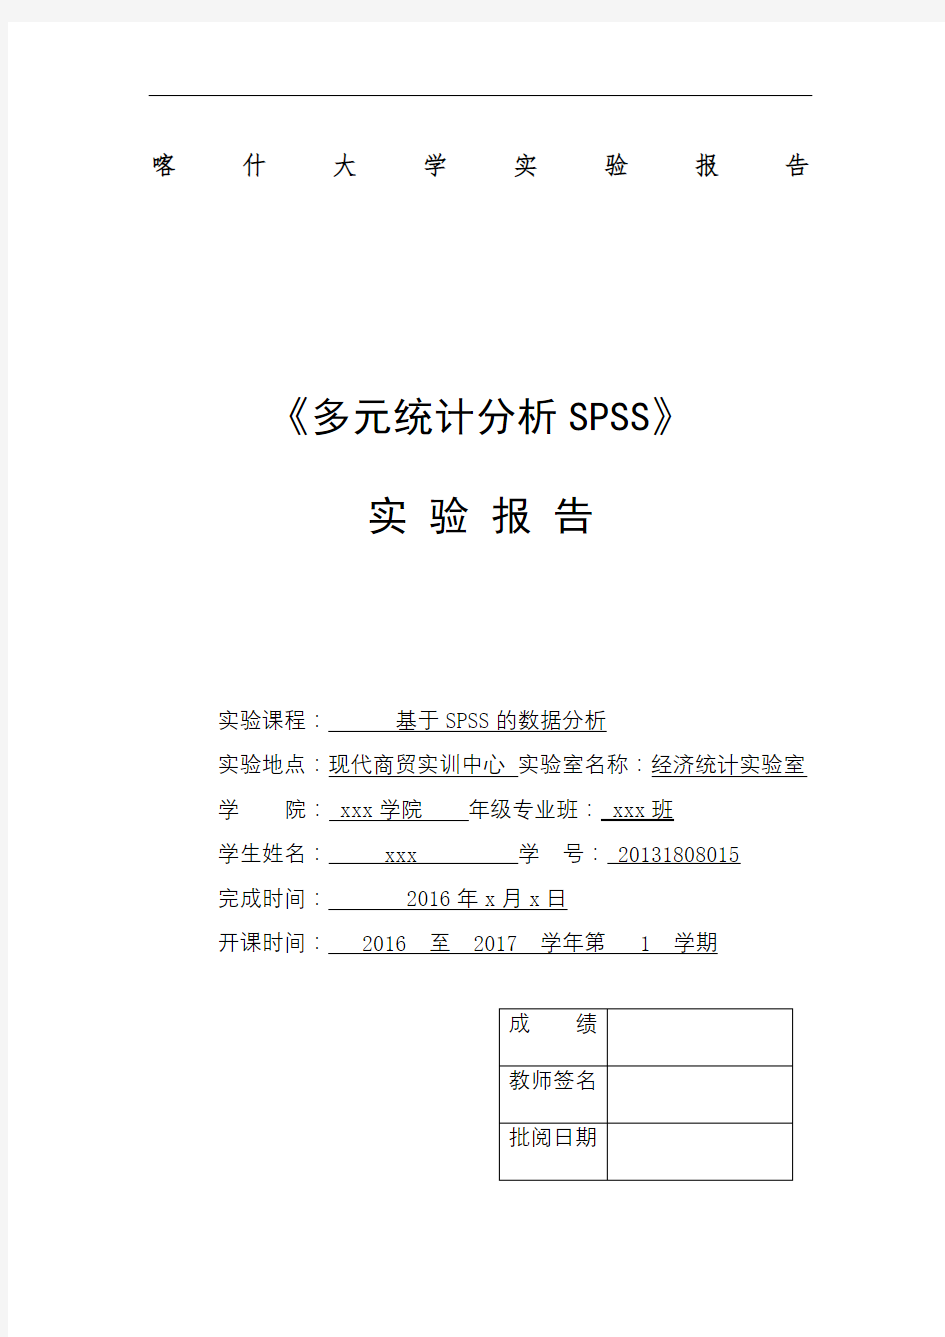 SPSS因子聚类案例分析报告